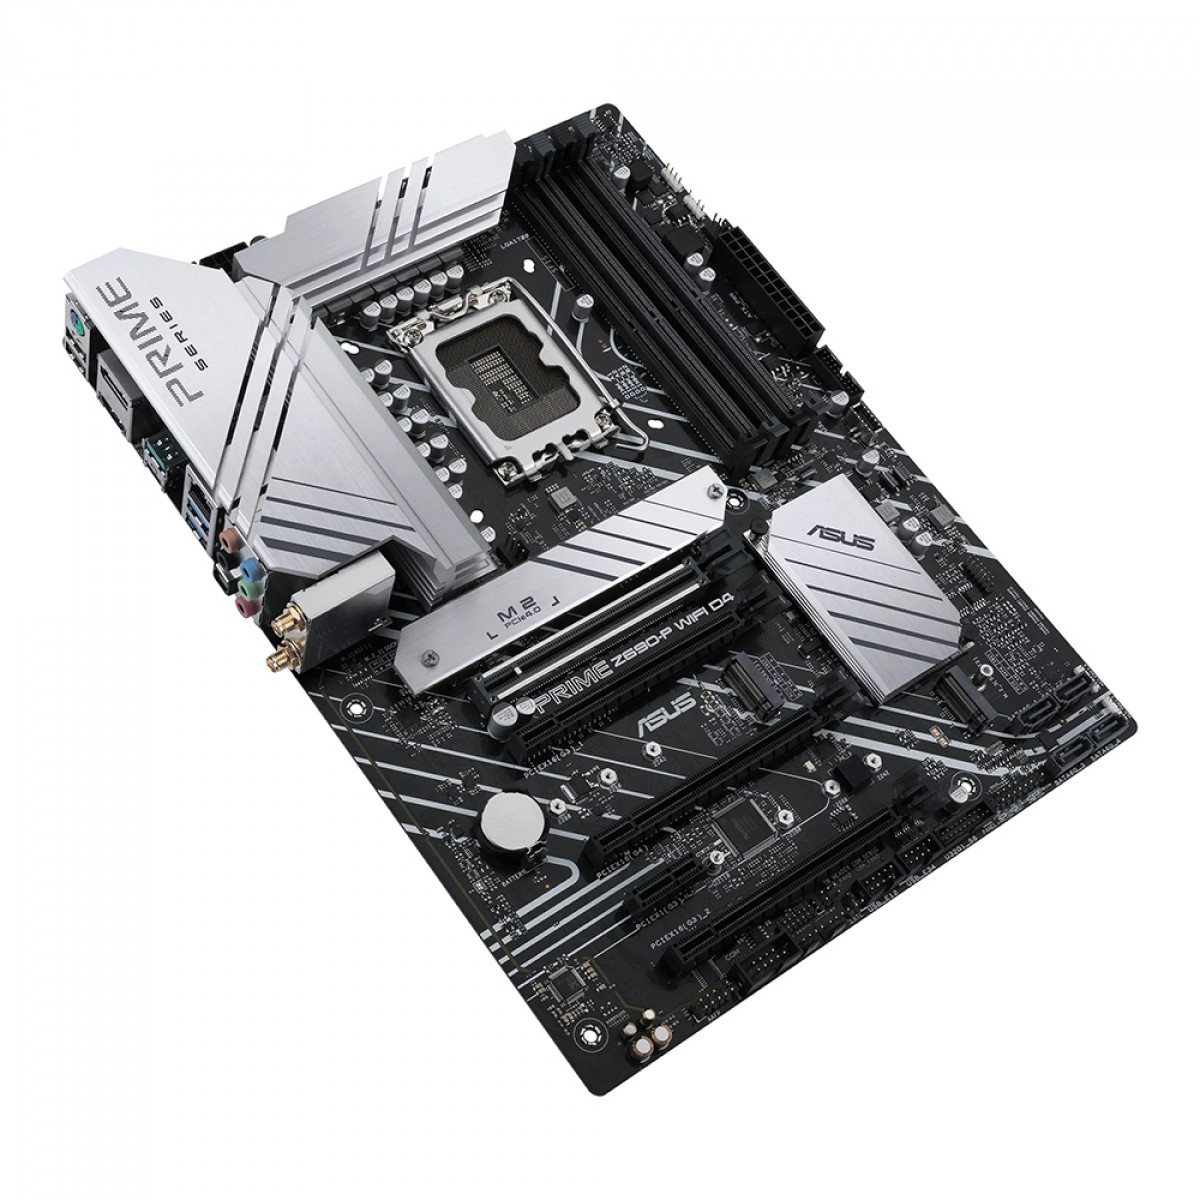 Placa Mãe Asus Prime Z690-P WIFI D4, Chipset Z690, Intel LGA 1700, ATX, DDR4, 90MB18N0-M0EAY0